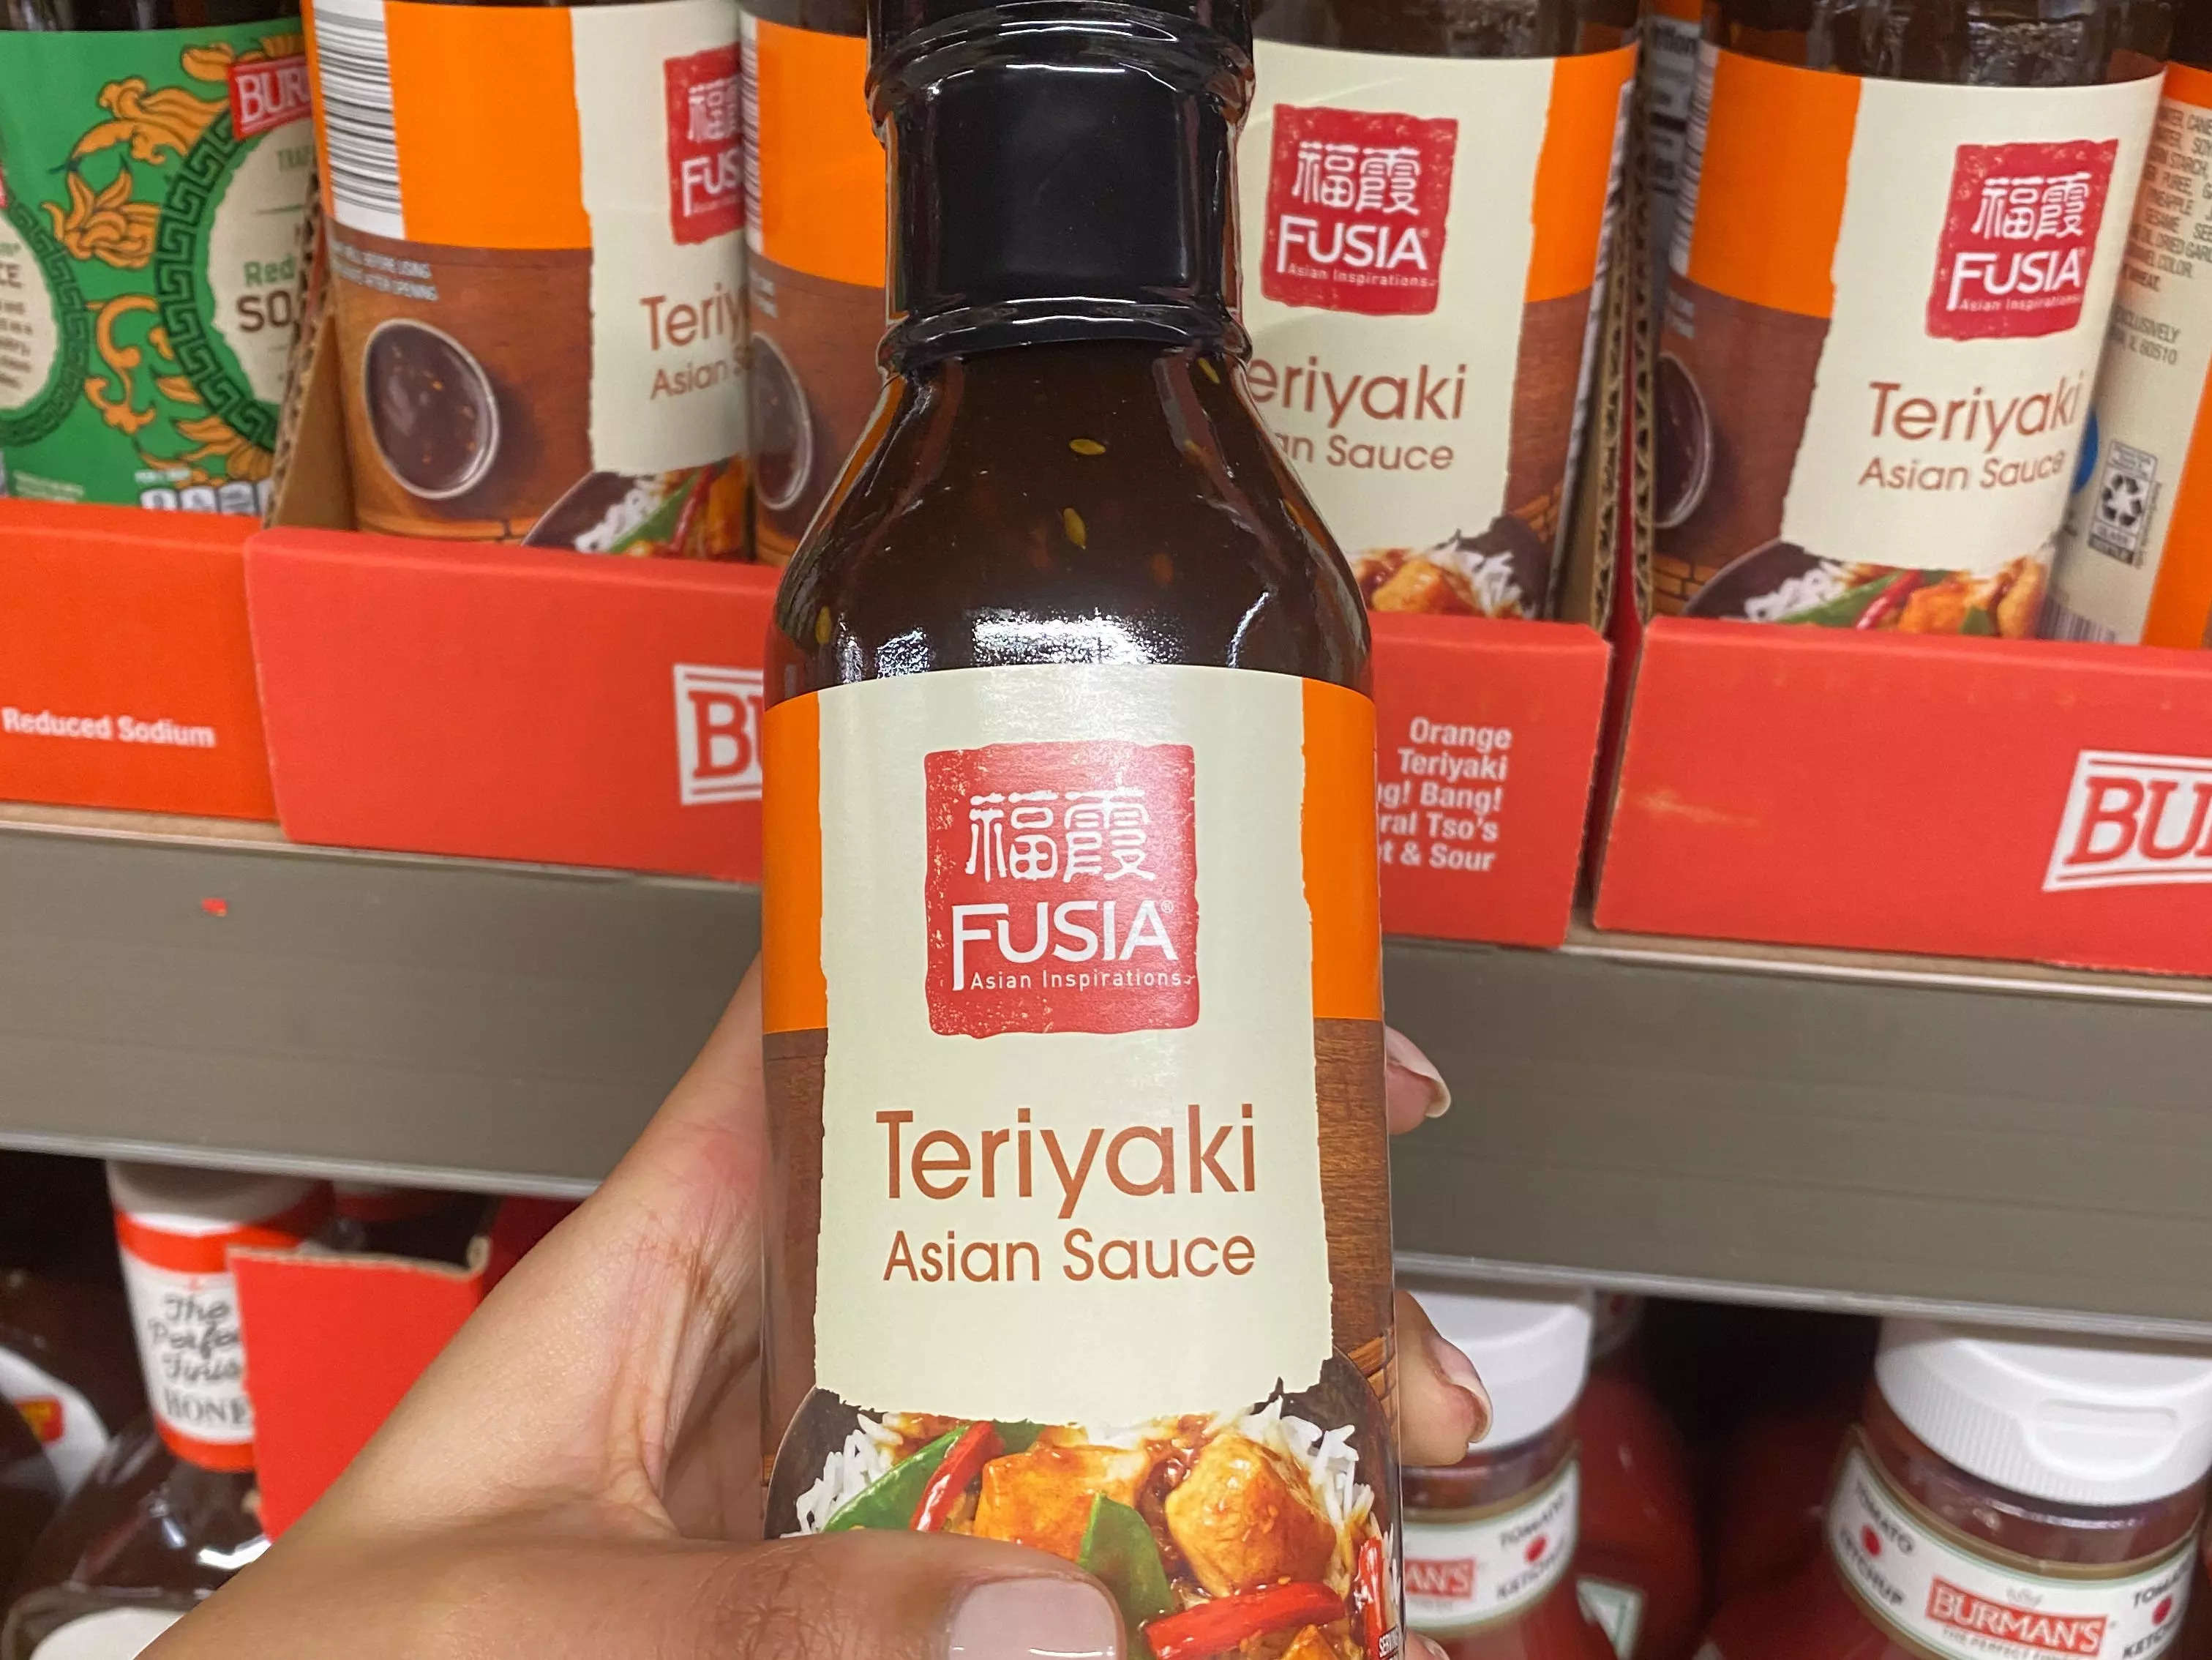 Hand holding bottle of Teriyaki sauce at Aldi